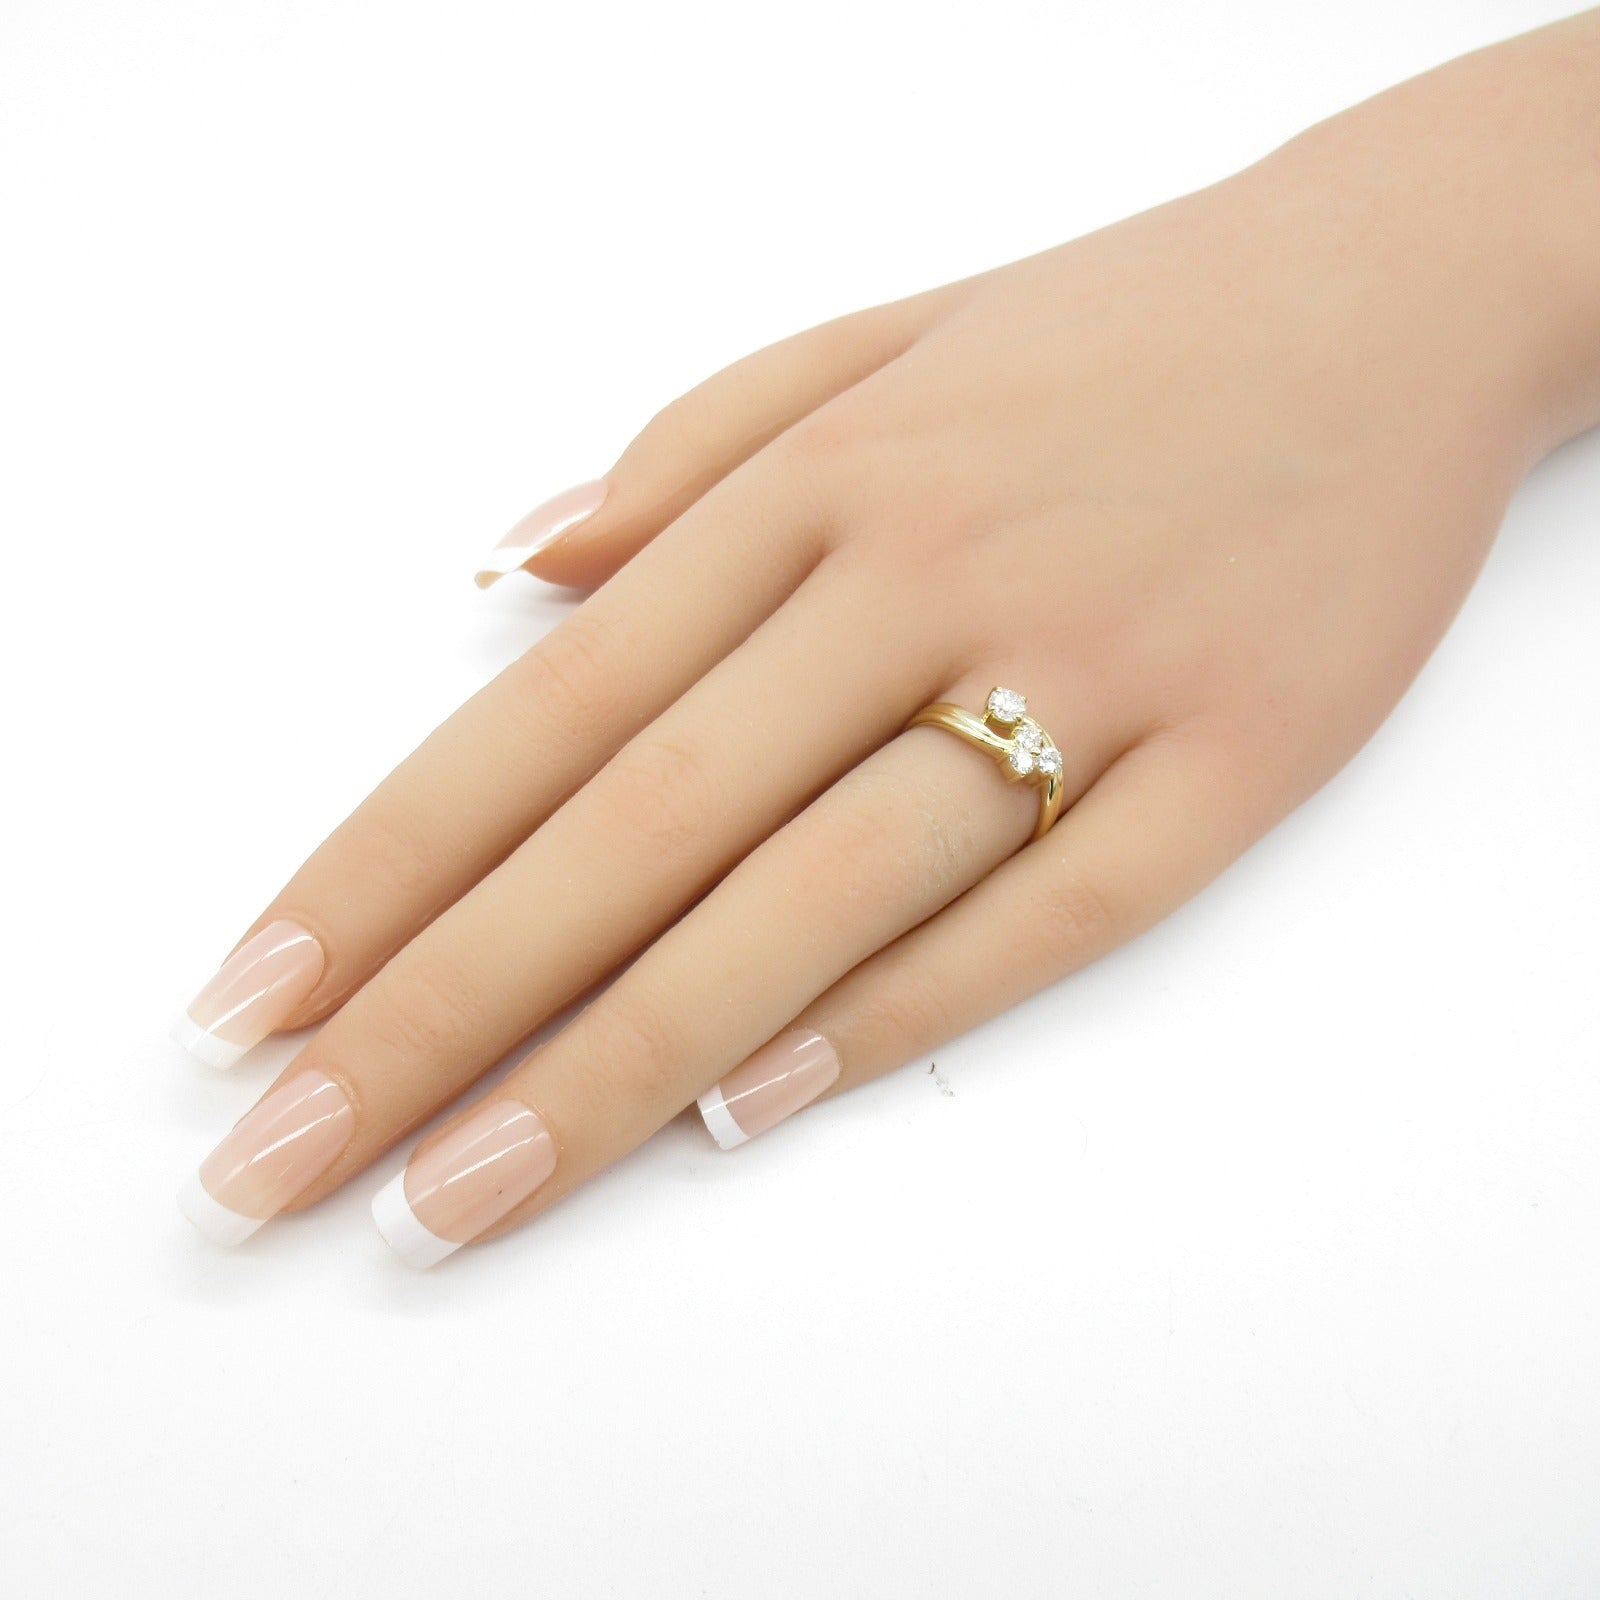 Jewelry Jewelry Diamond Ring Ring Ring Jewelry K18 (yellow g) Diamond  Clear Diamond 3.0g